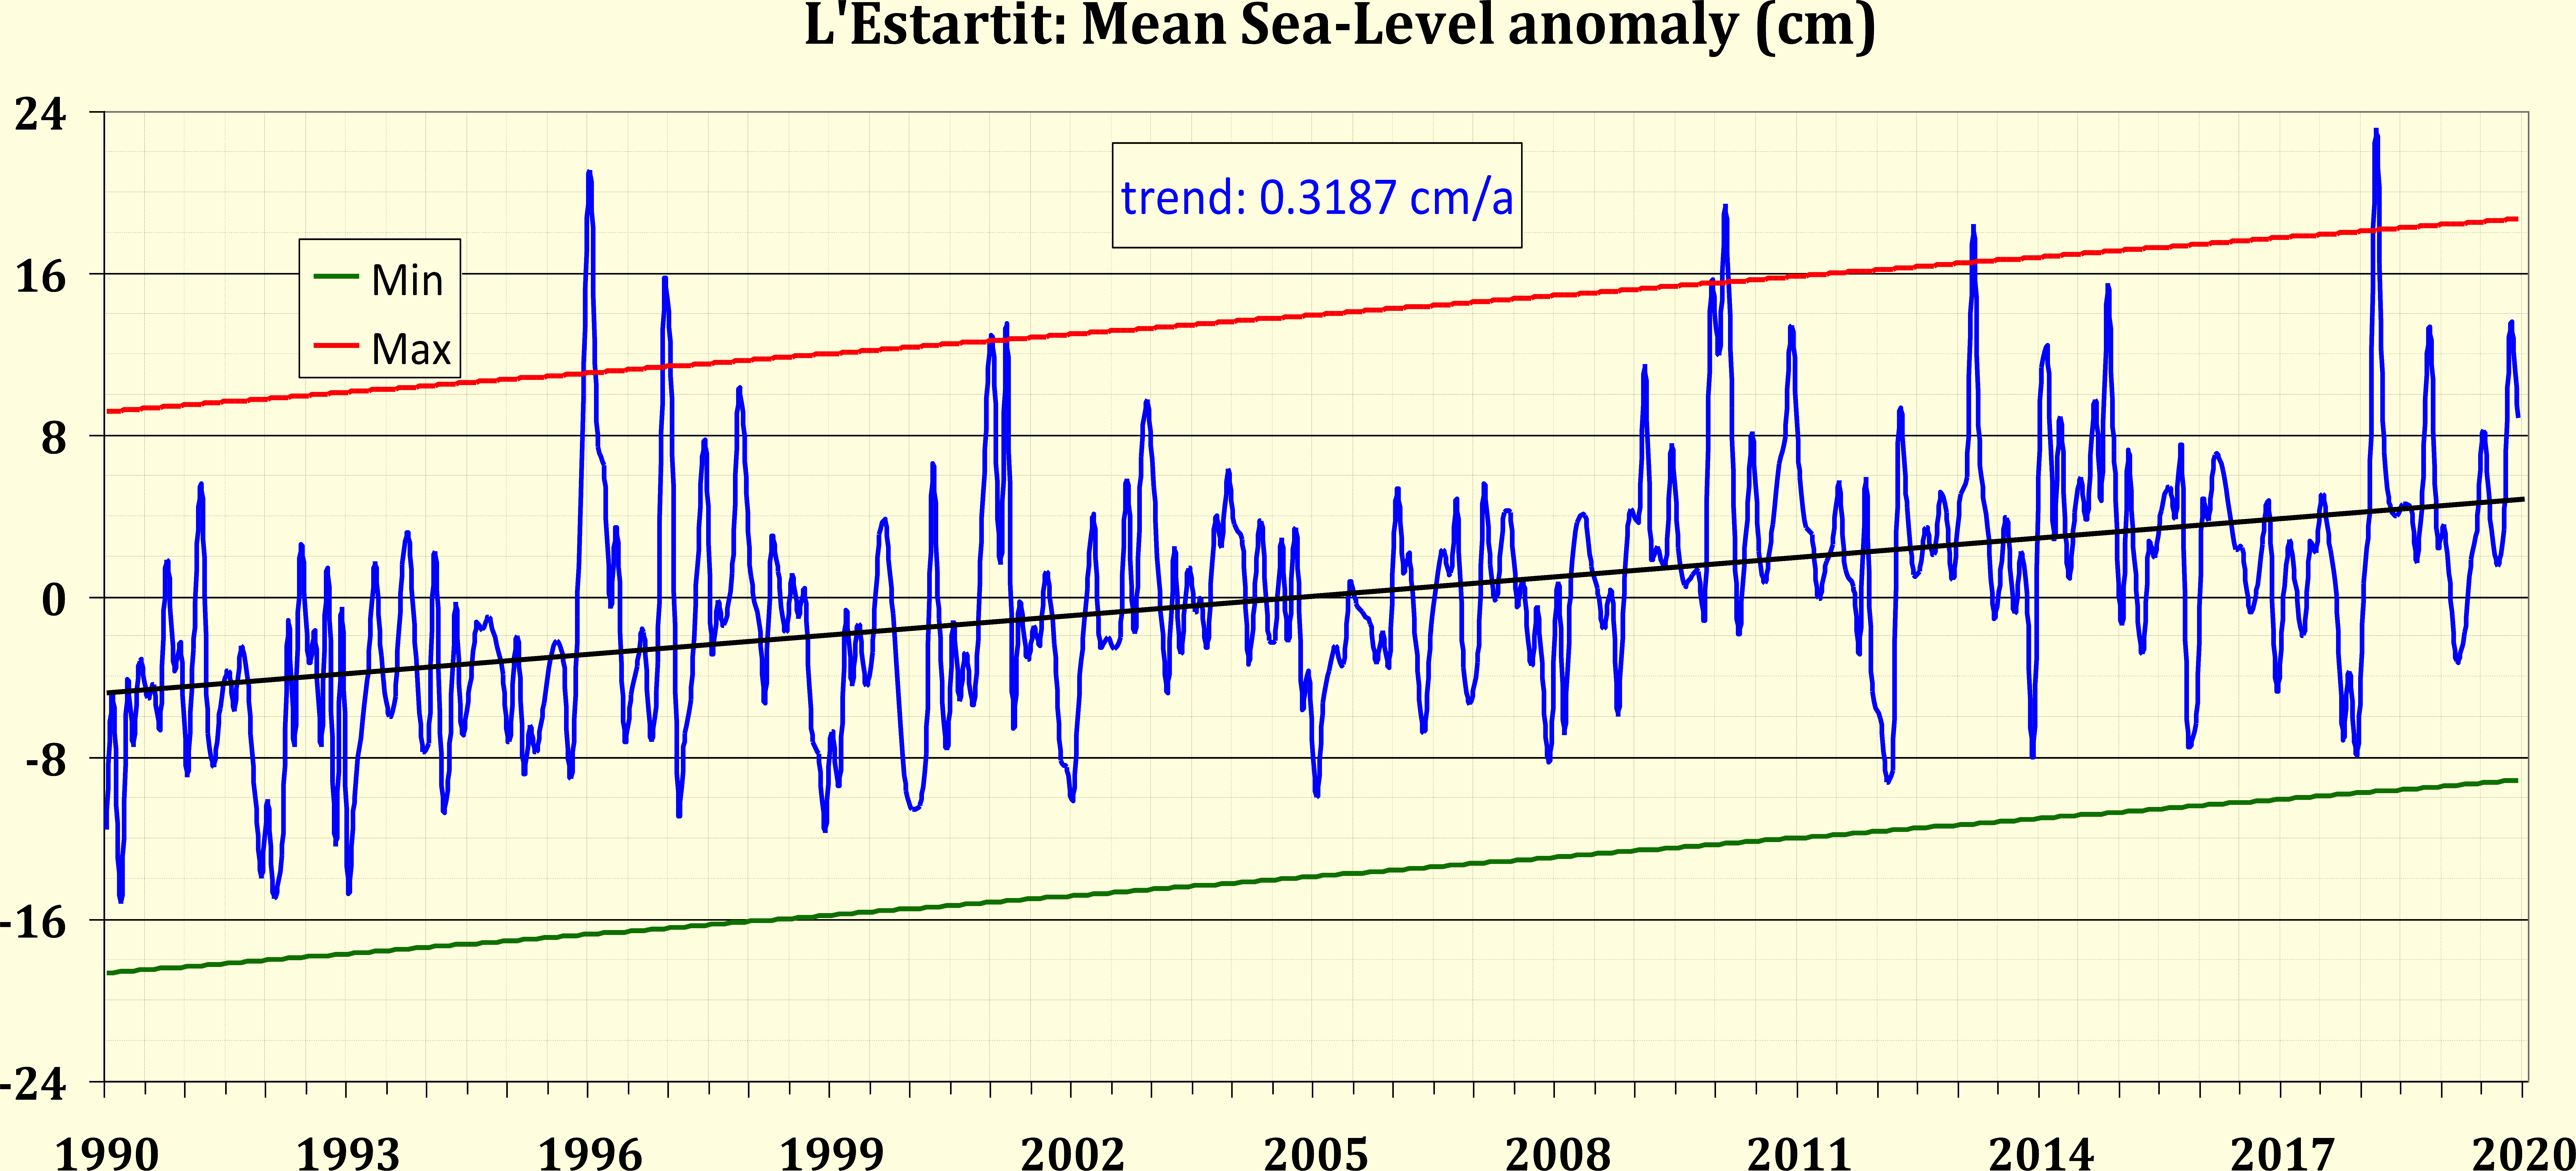 L'Estartit mean sea level anomaly (cm)